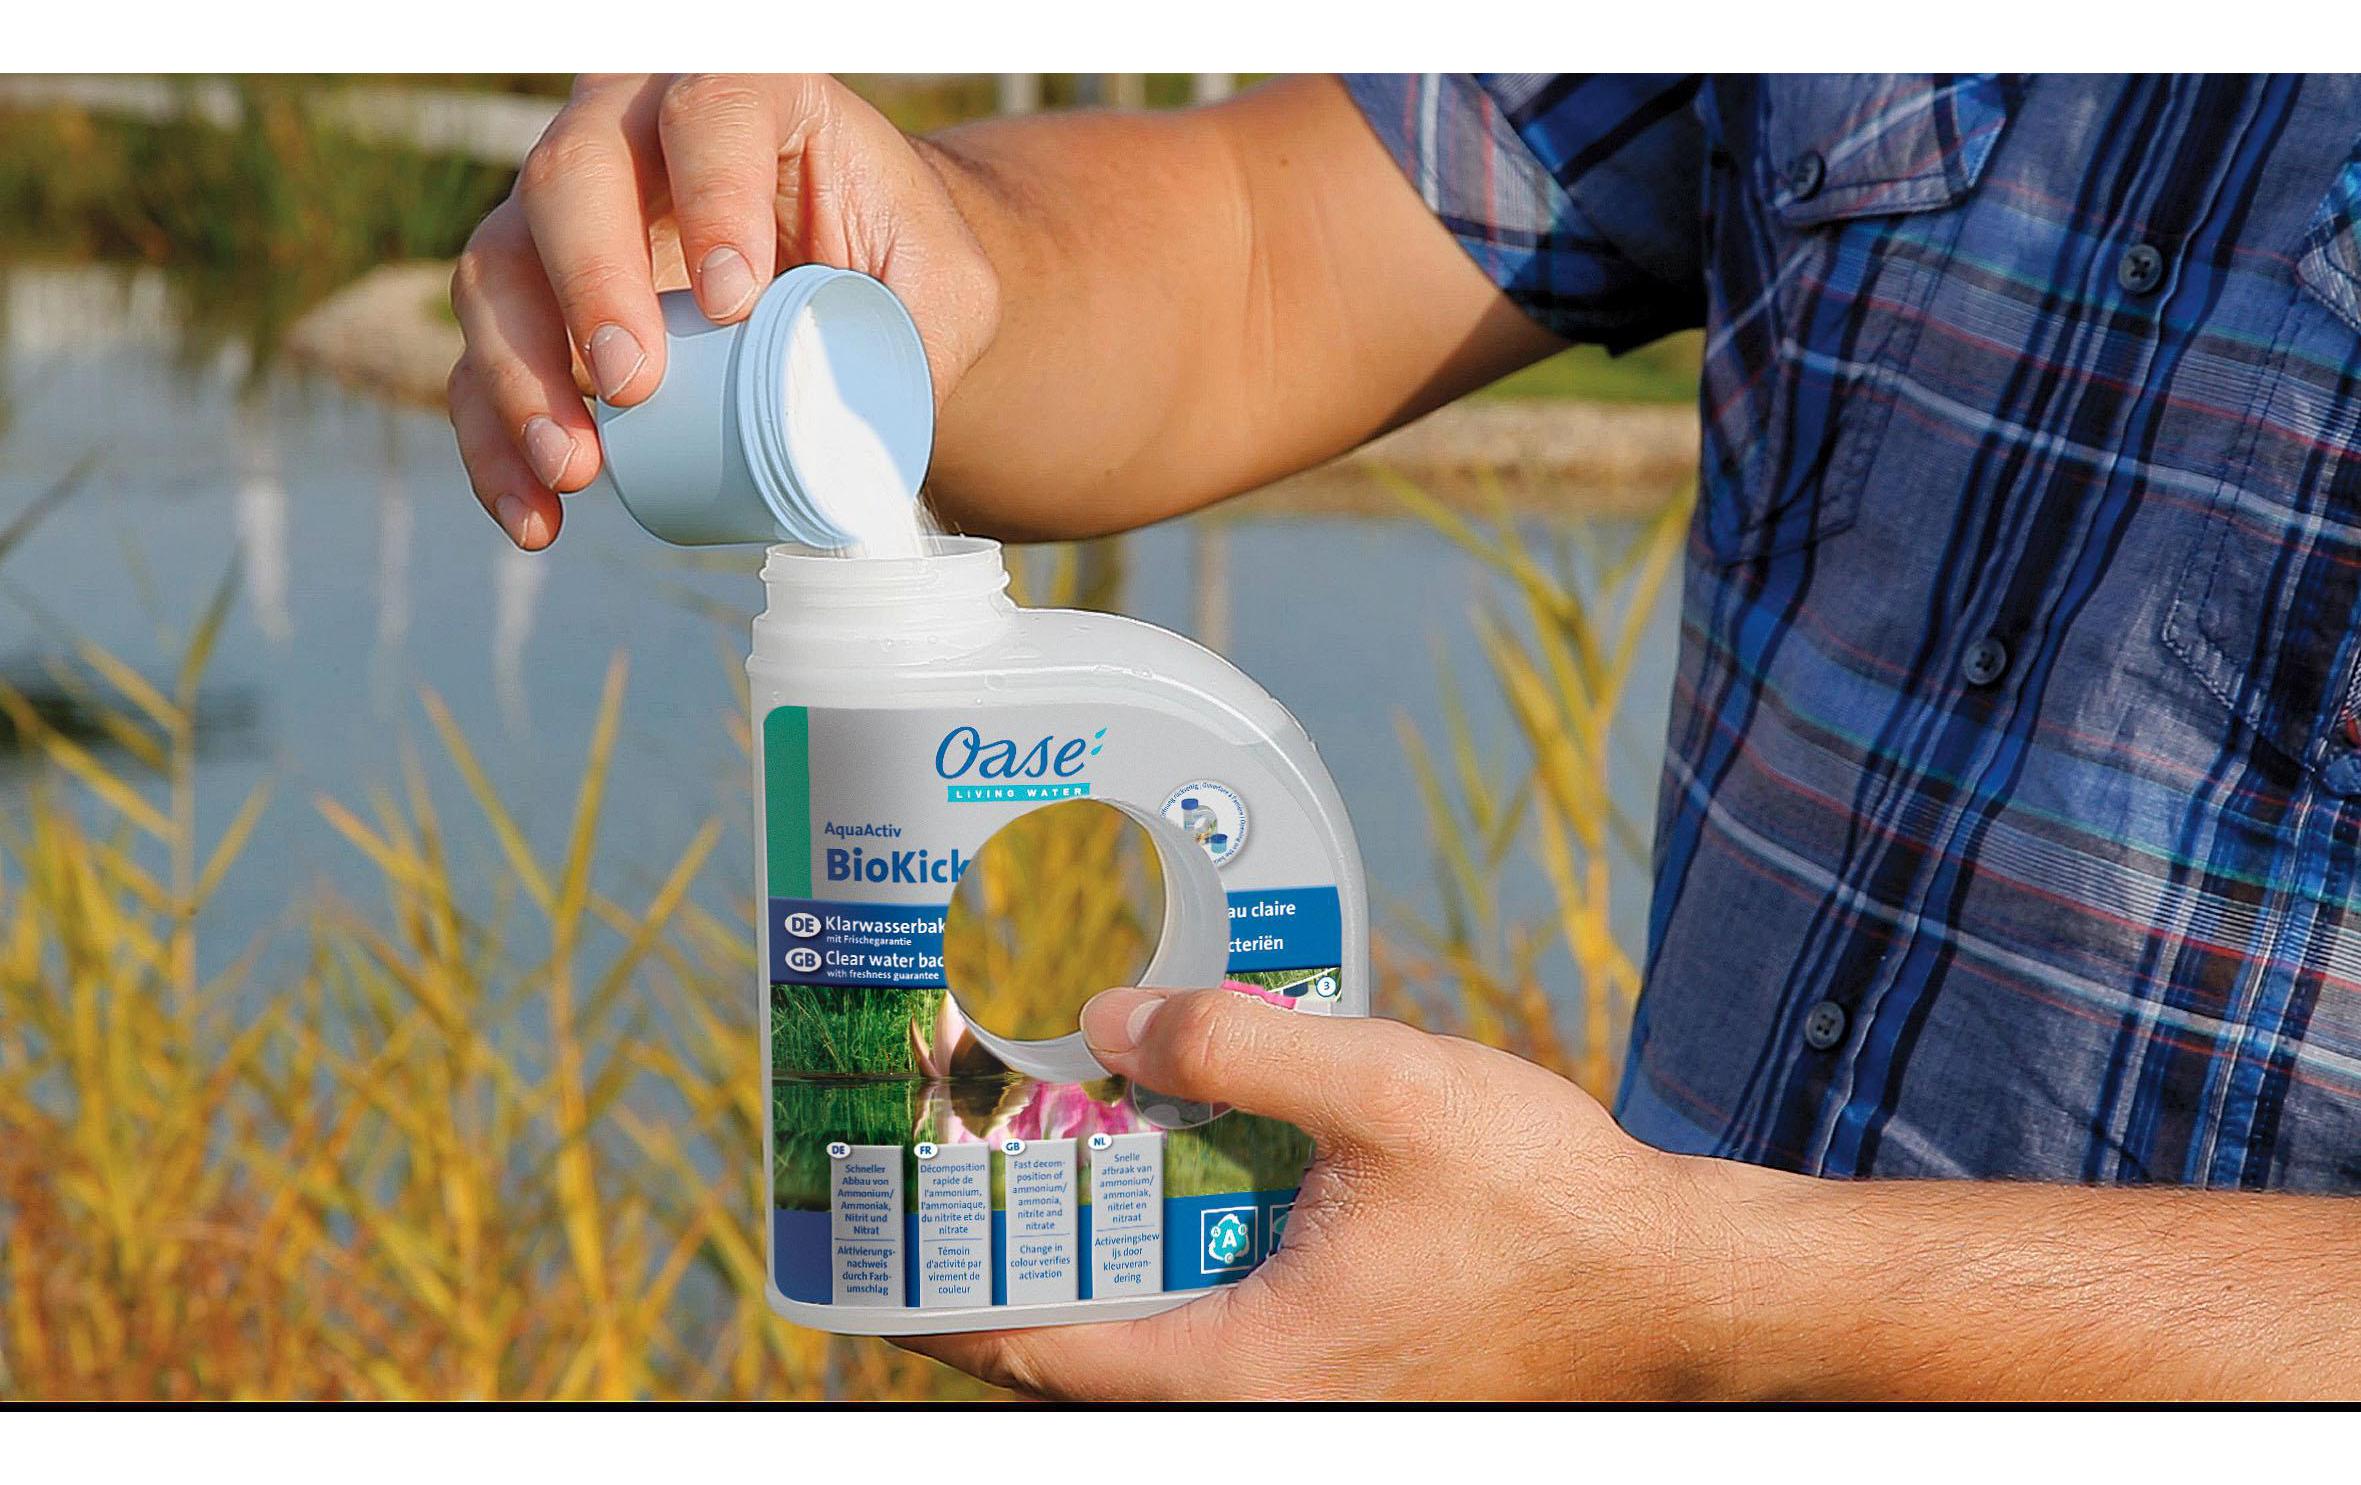 OASE Starterbakterien AquaActiv BioKick fresh 500 ml